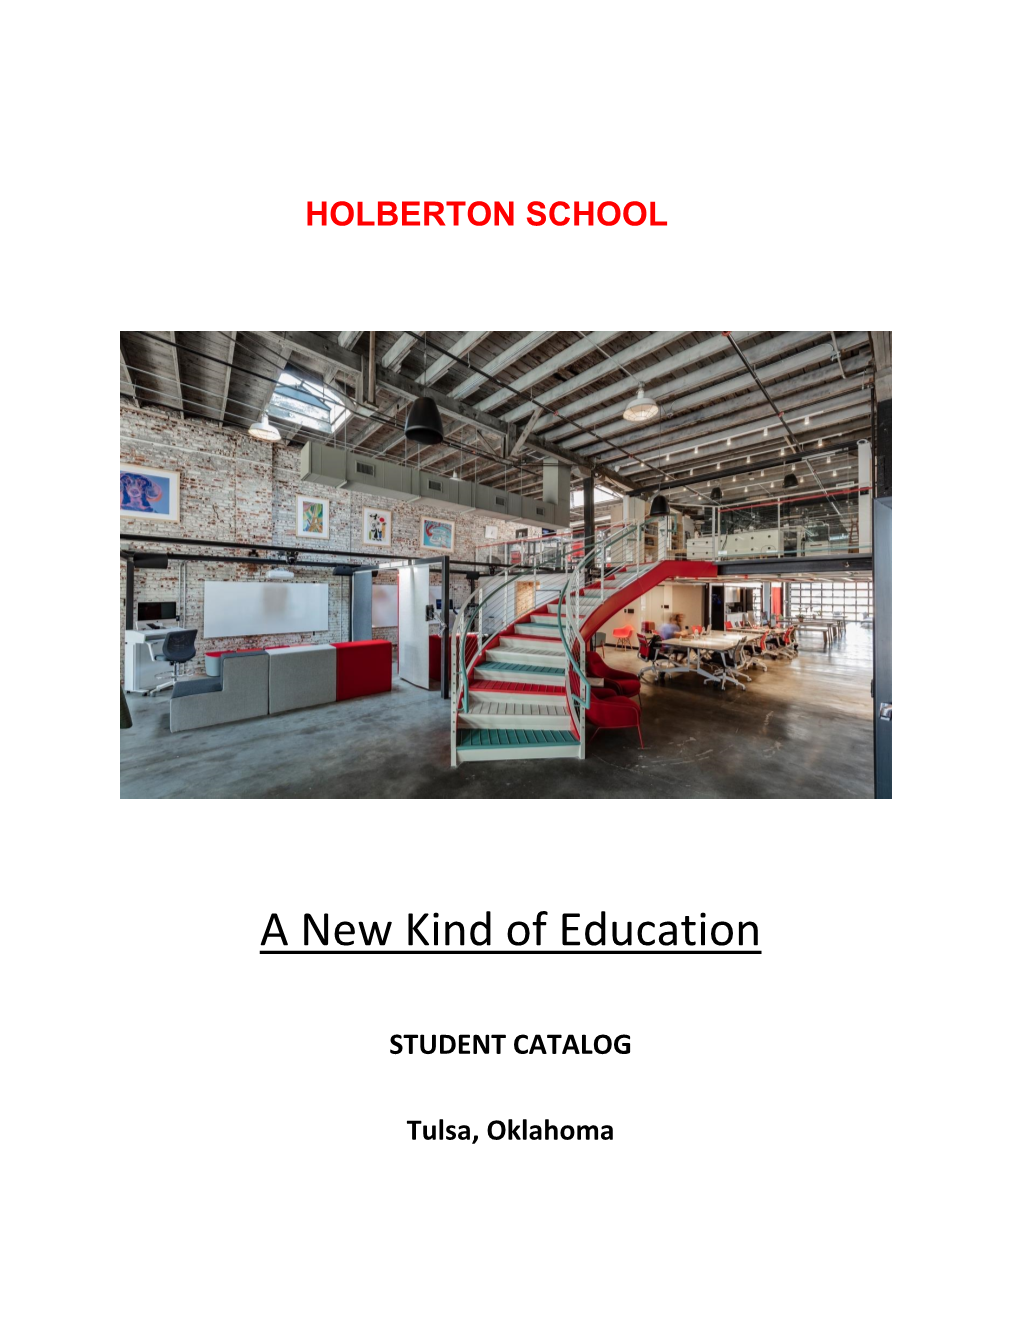 Holberton School